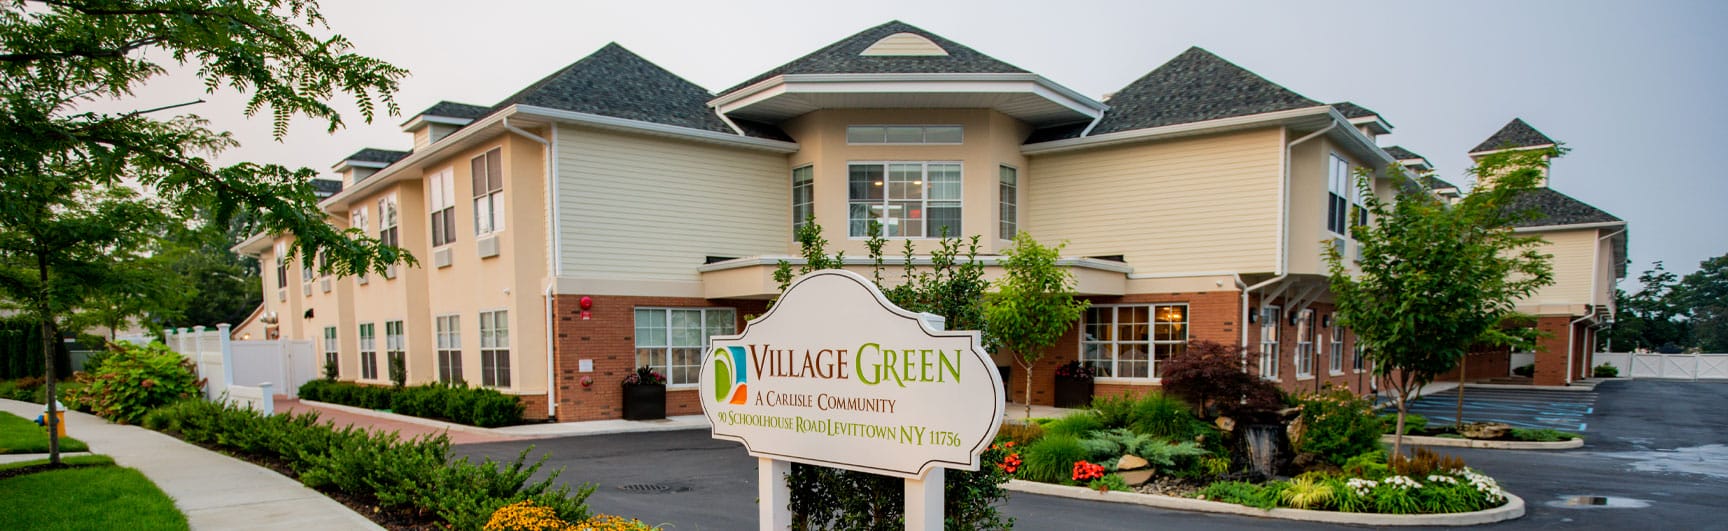 village green exterior